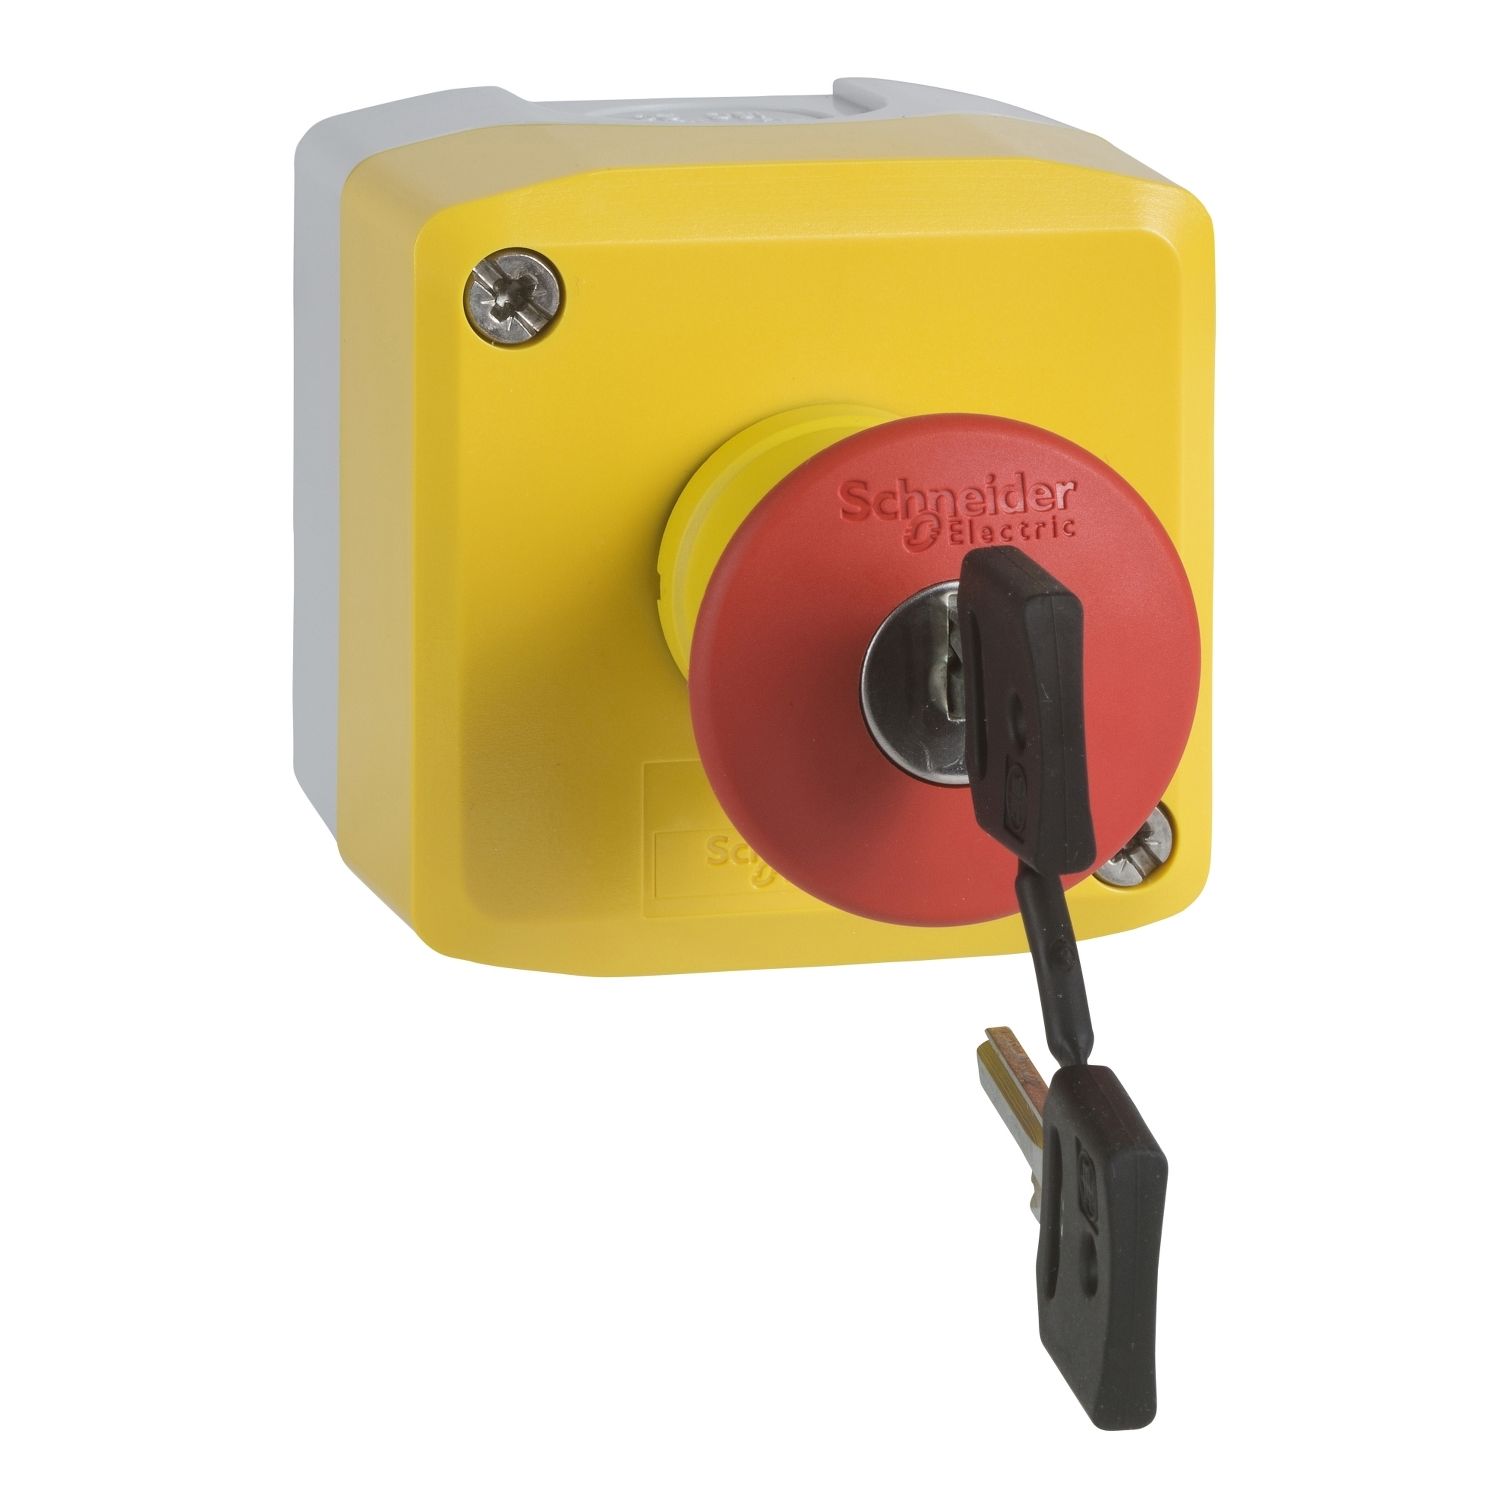 XALK188E Control station, Harmony XALD, XALK, plastic, yellow, 1 red mushroom head push button 40mm, emergency stop key release 1 NO + 1 NC, unmarked